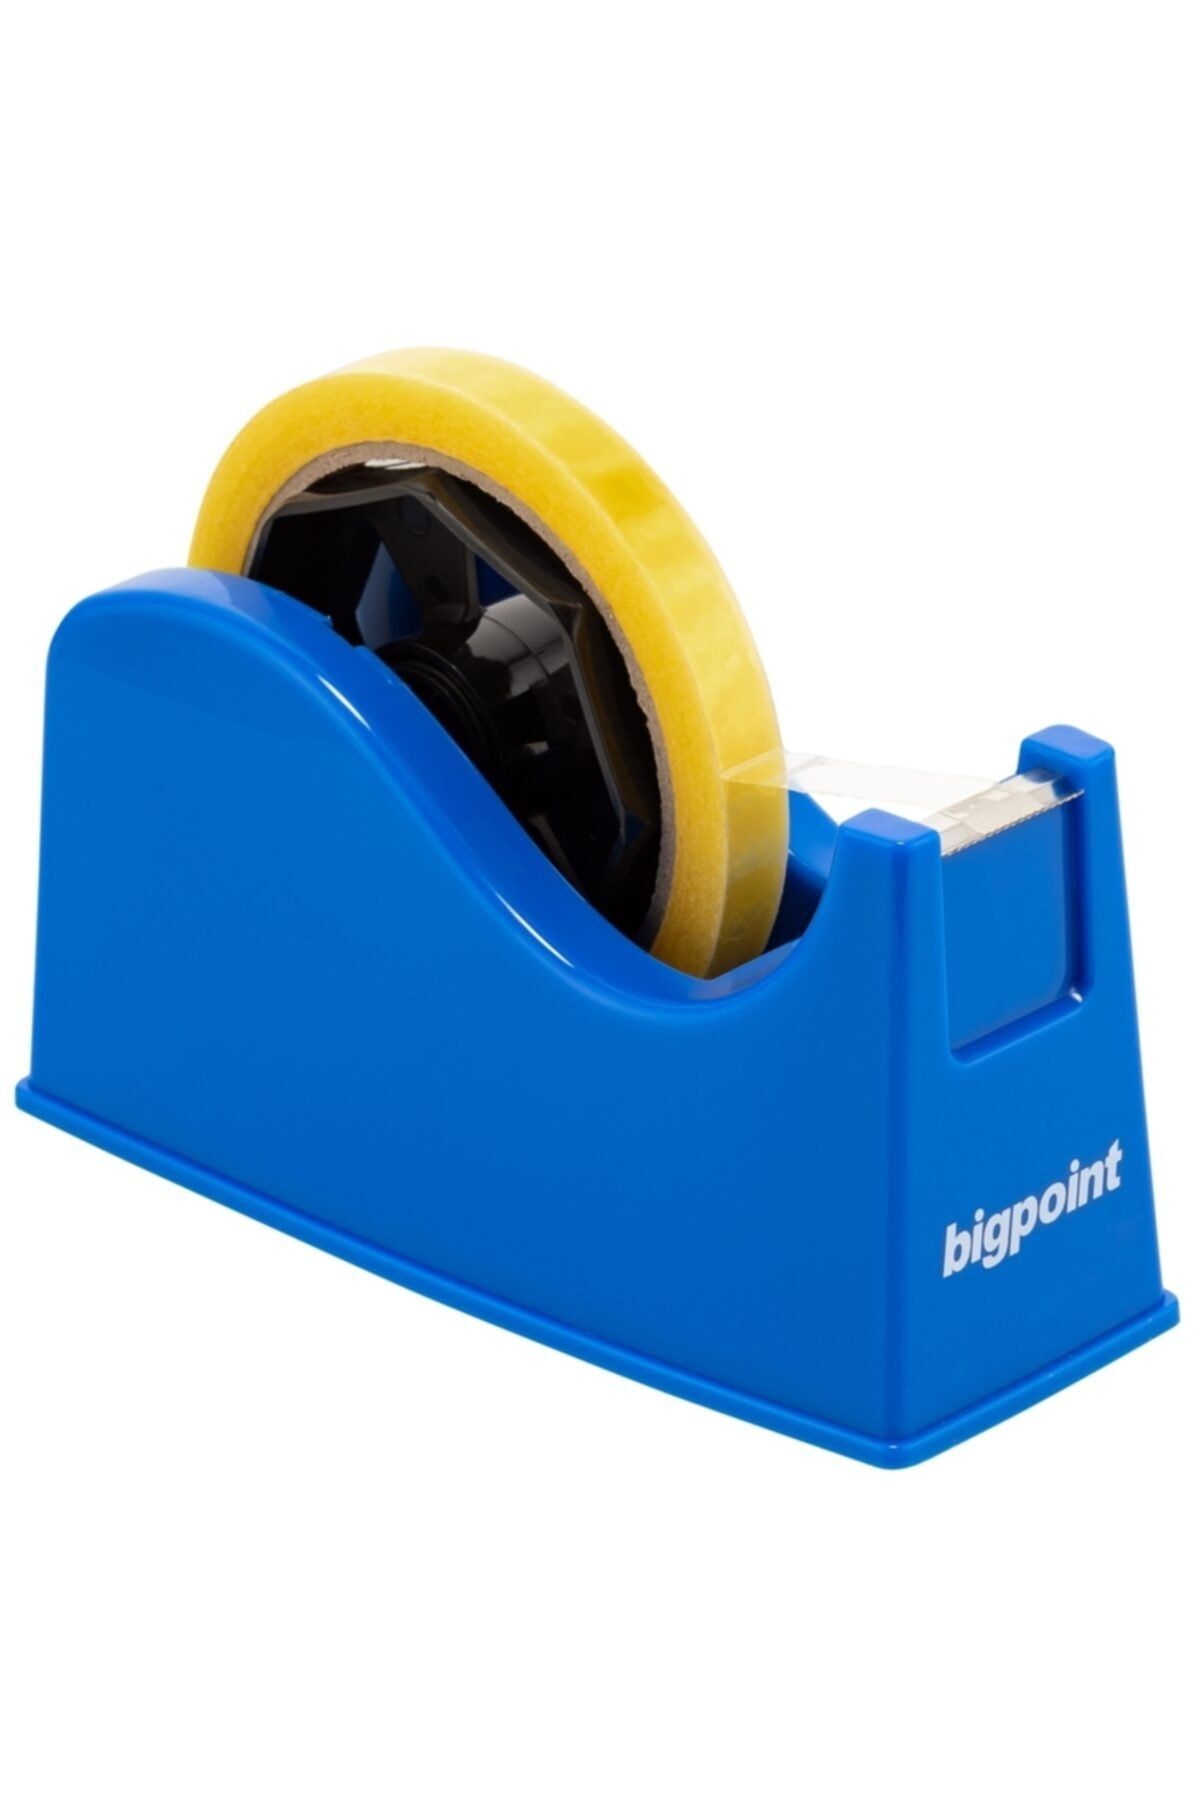 Bigpoint Bant Kesme Makinası  Mavi